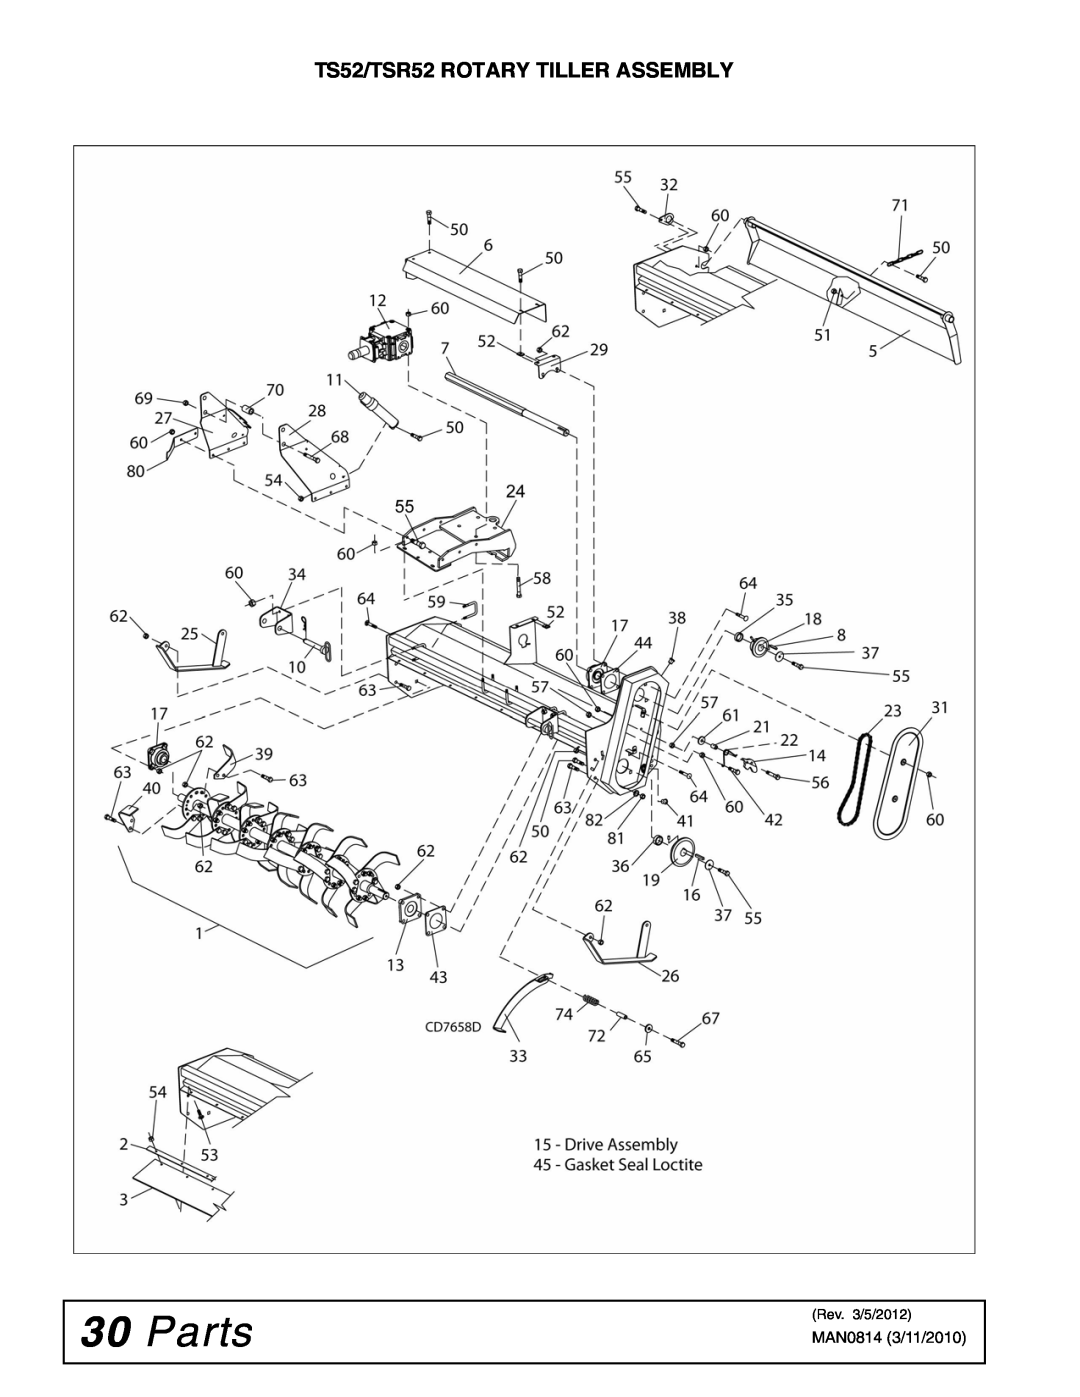 Woods Equipment TS44 manual Parts, TS52/TSR52 ROTARY TILLER ASSEMBLY 